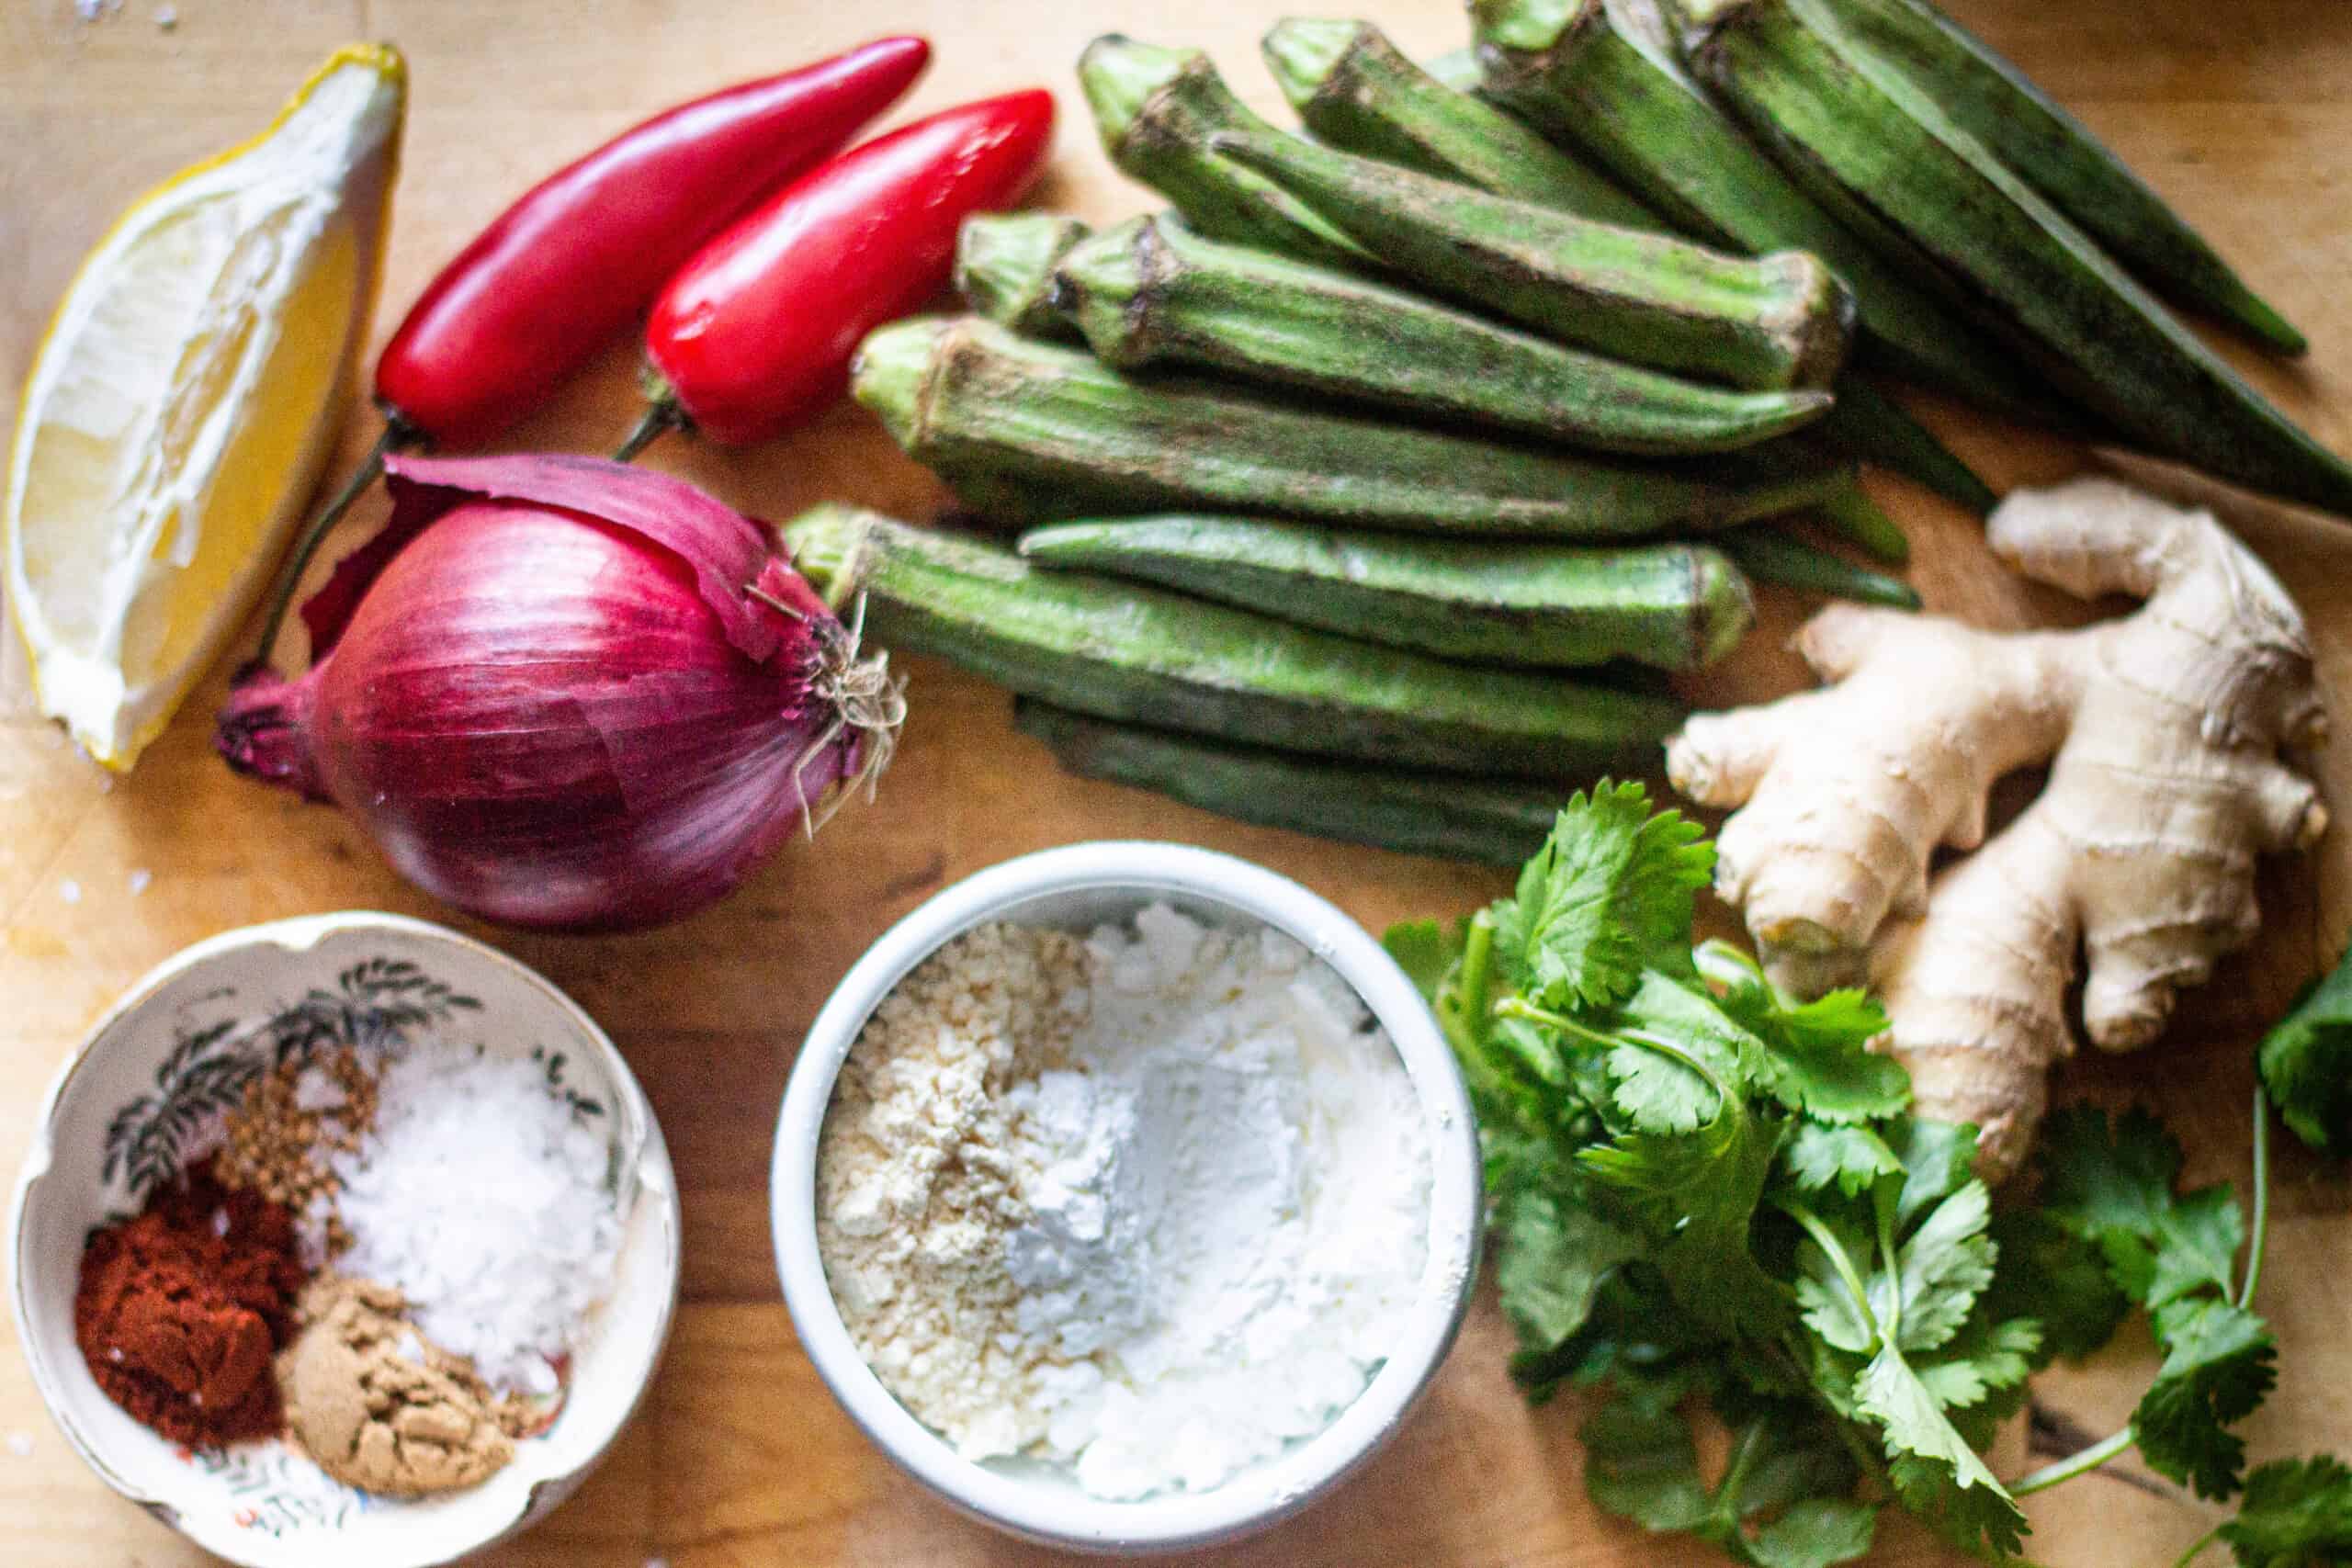 Ingredients for fried okra